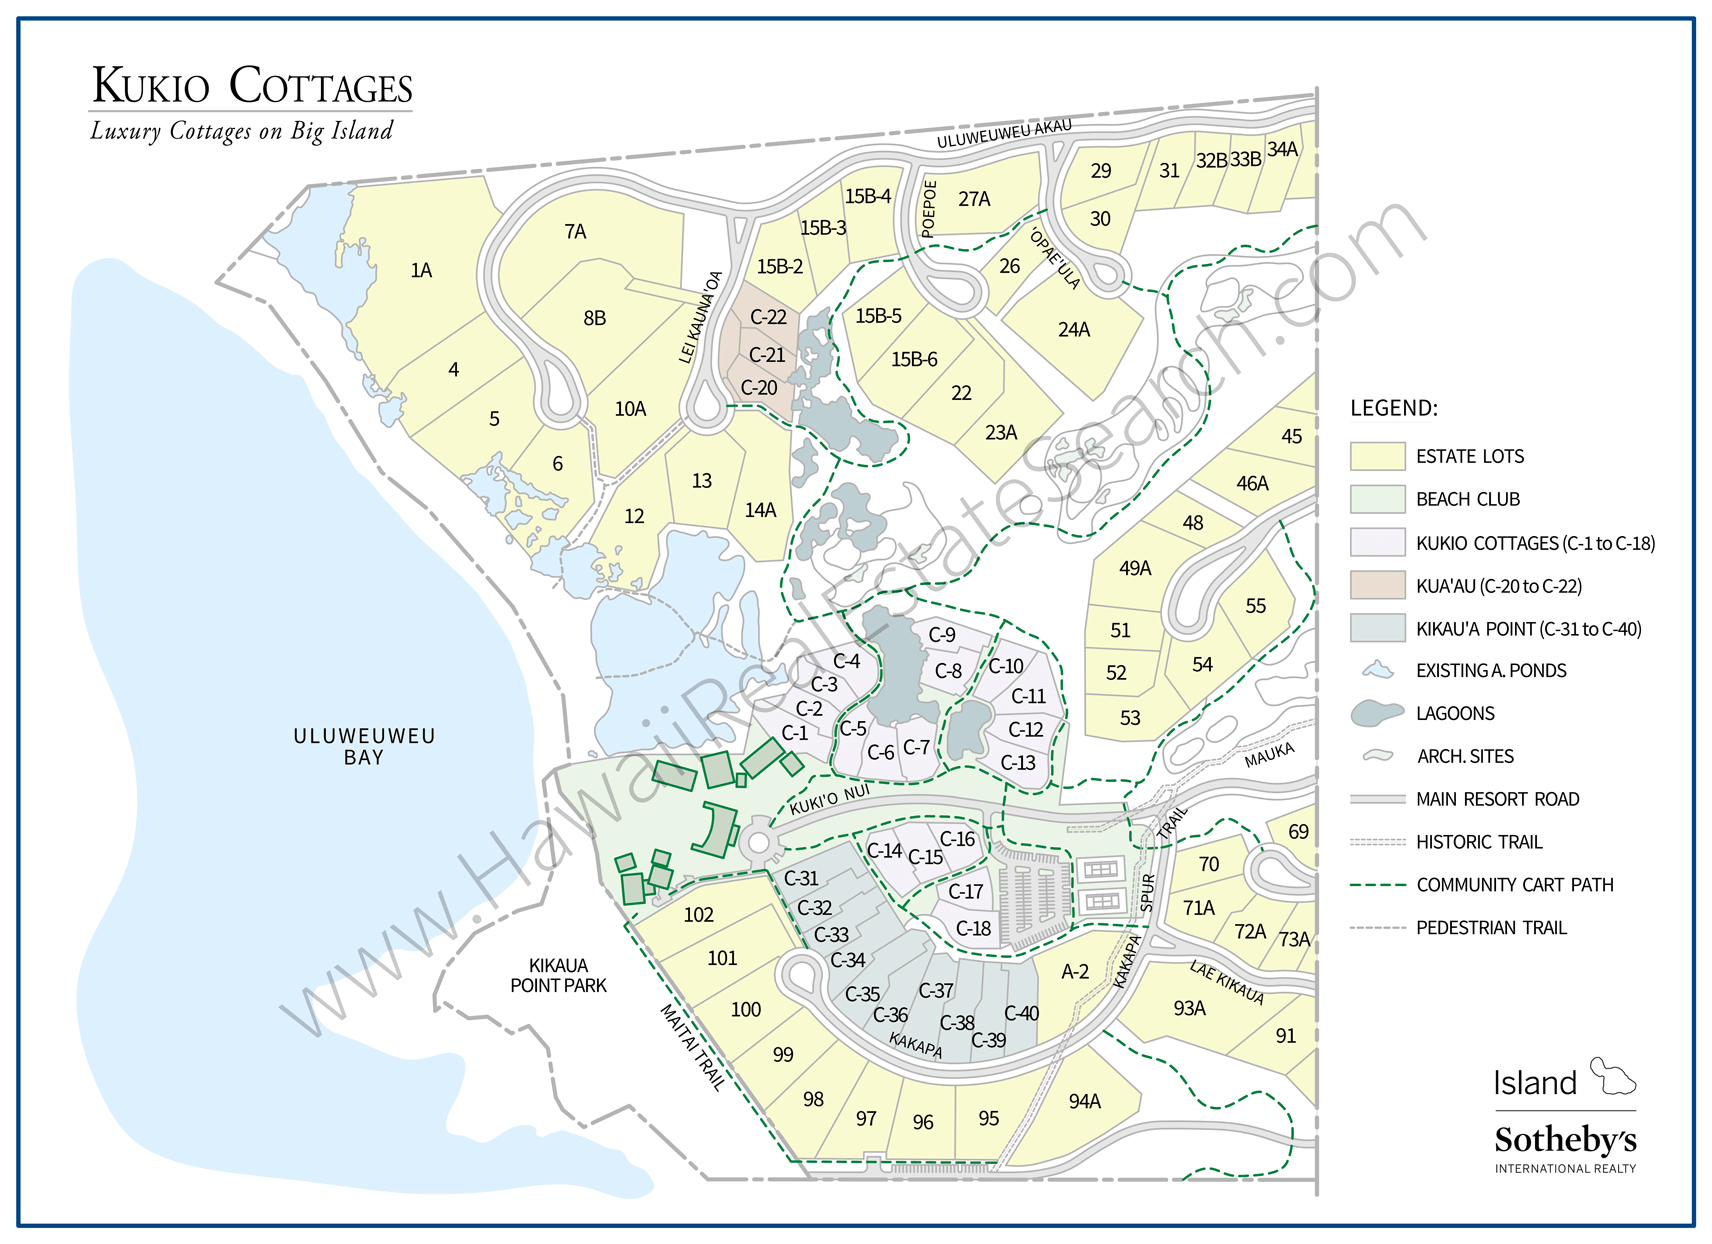 Kukio Cottages Map